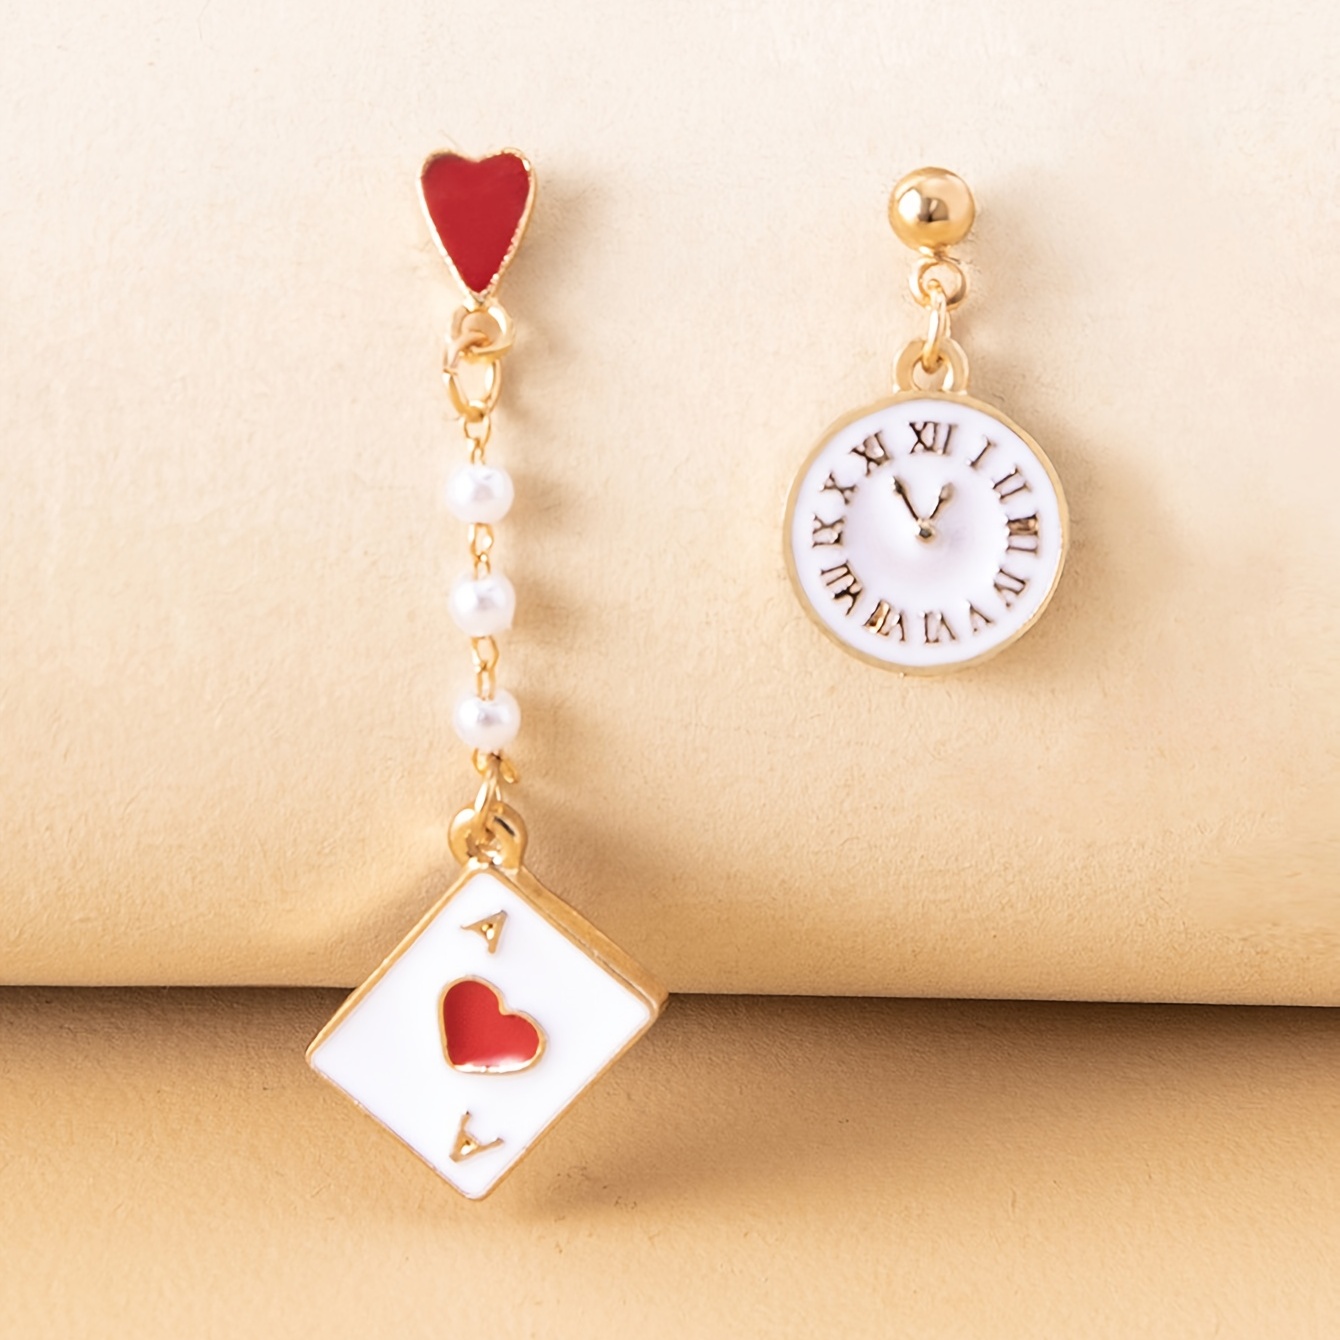 GTONEE 40 Pcs Enamel Heart Poker Card Charms Gold Metal Card Pendants for  DIY Keychains Necklace Bracelet Earring Jewelry Making Craft Ornament